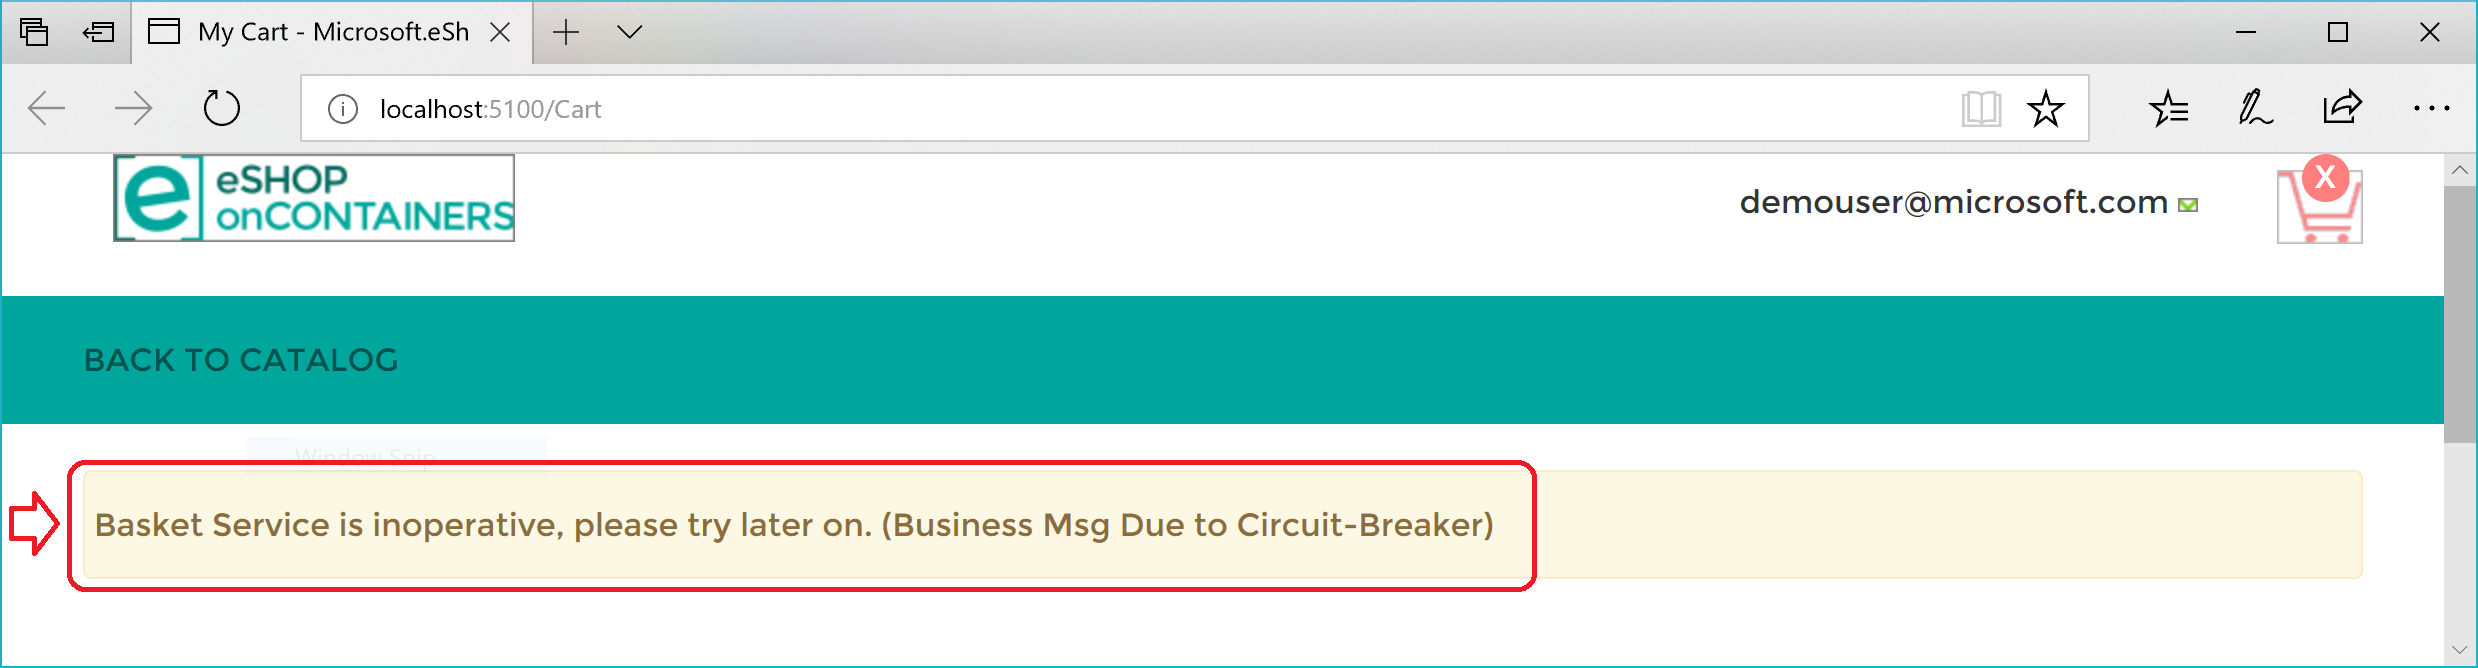 Screenshot of the MVC web app with basket service inoperative error.